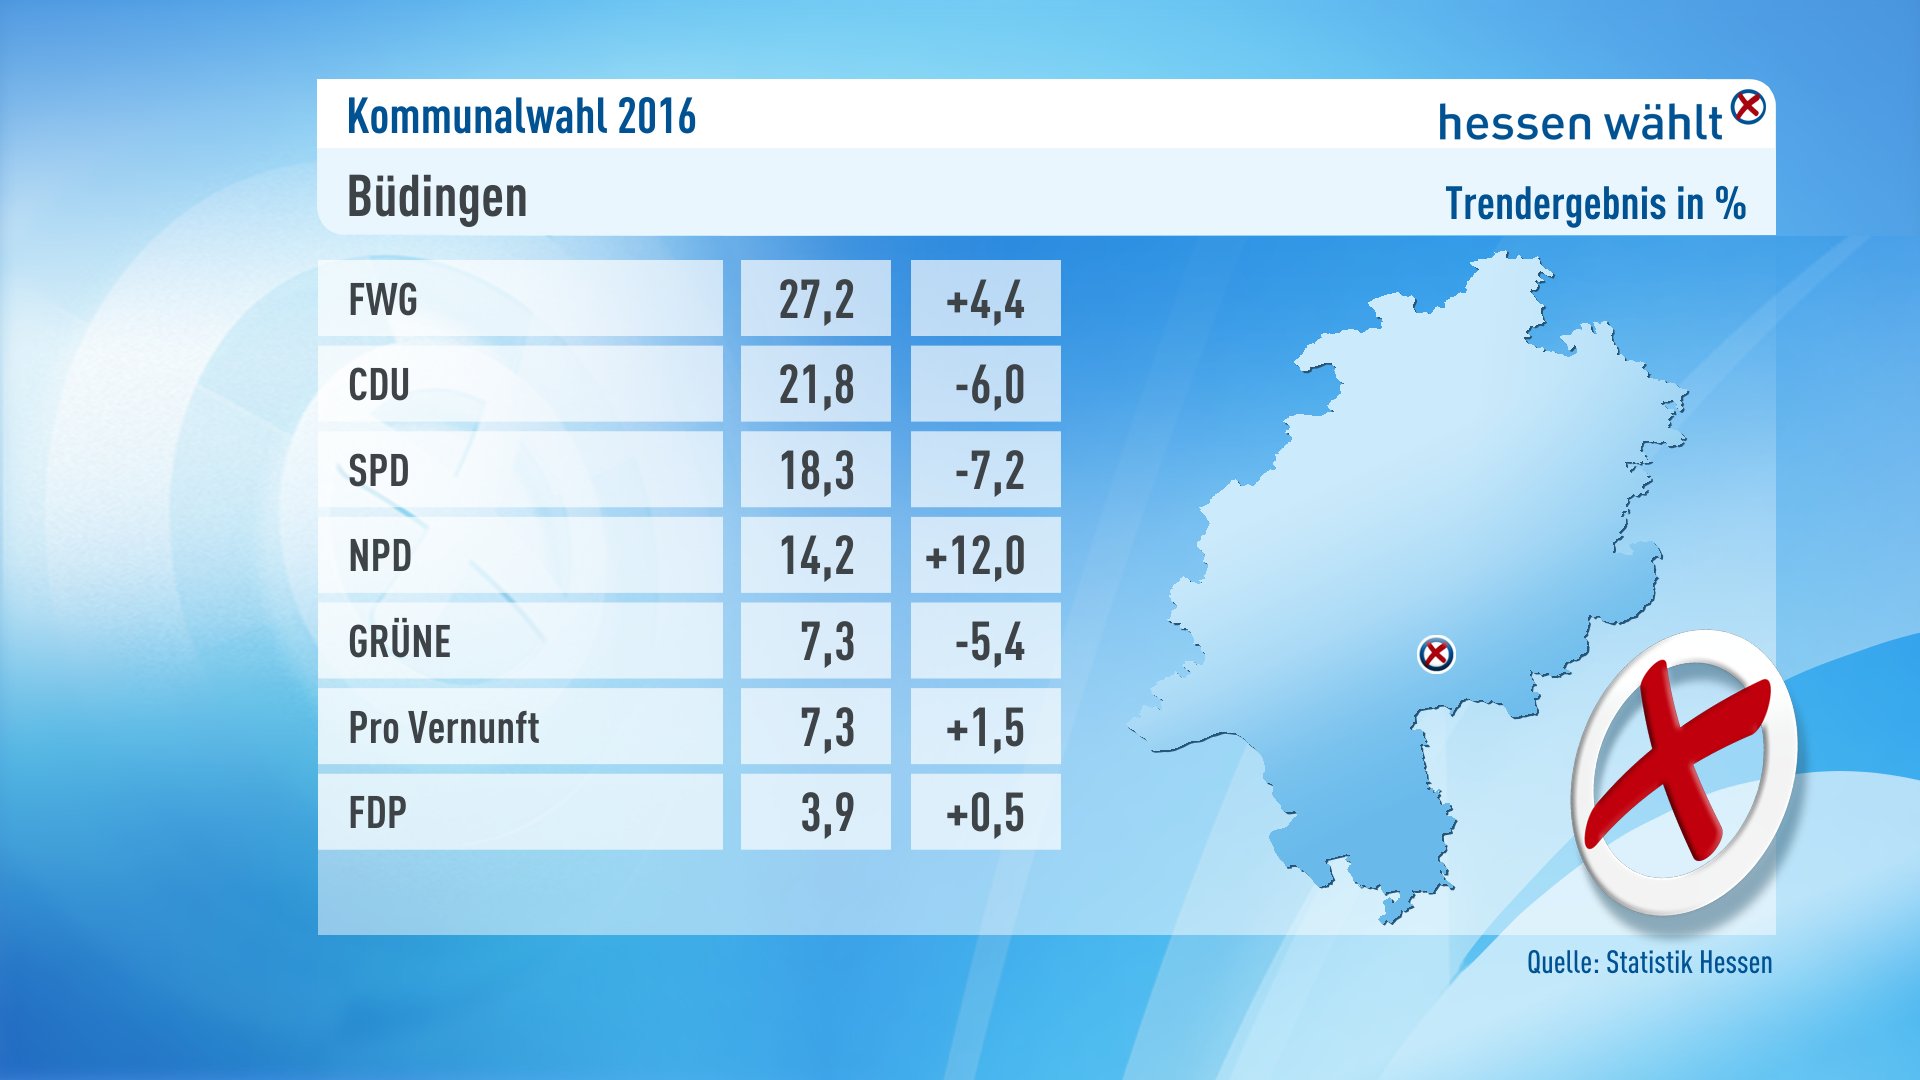 hessenschau on Twitter: Trendergebnis #Büdingen: #NPD bei 14,2%, stärkste  Kraft FWG 27,2% - alle Ergebnisse: https://t.co/8VhWbQPROZ #kwhe  https://t.co/dNPsy4UP9E / Twitter